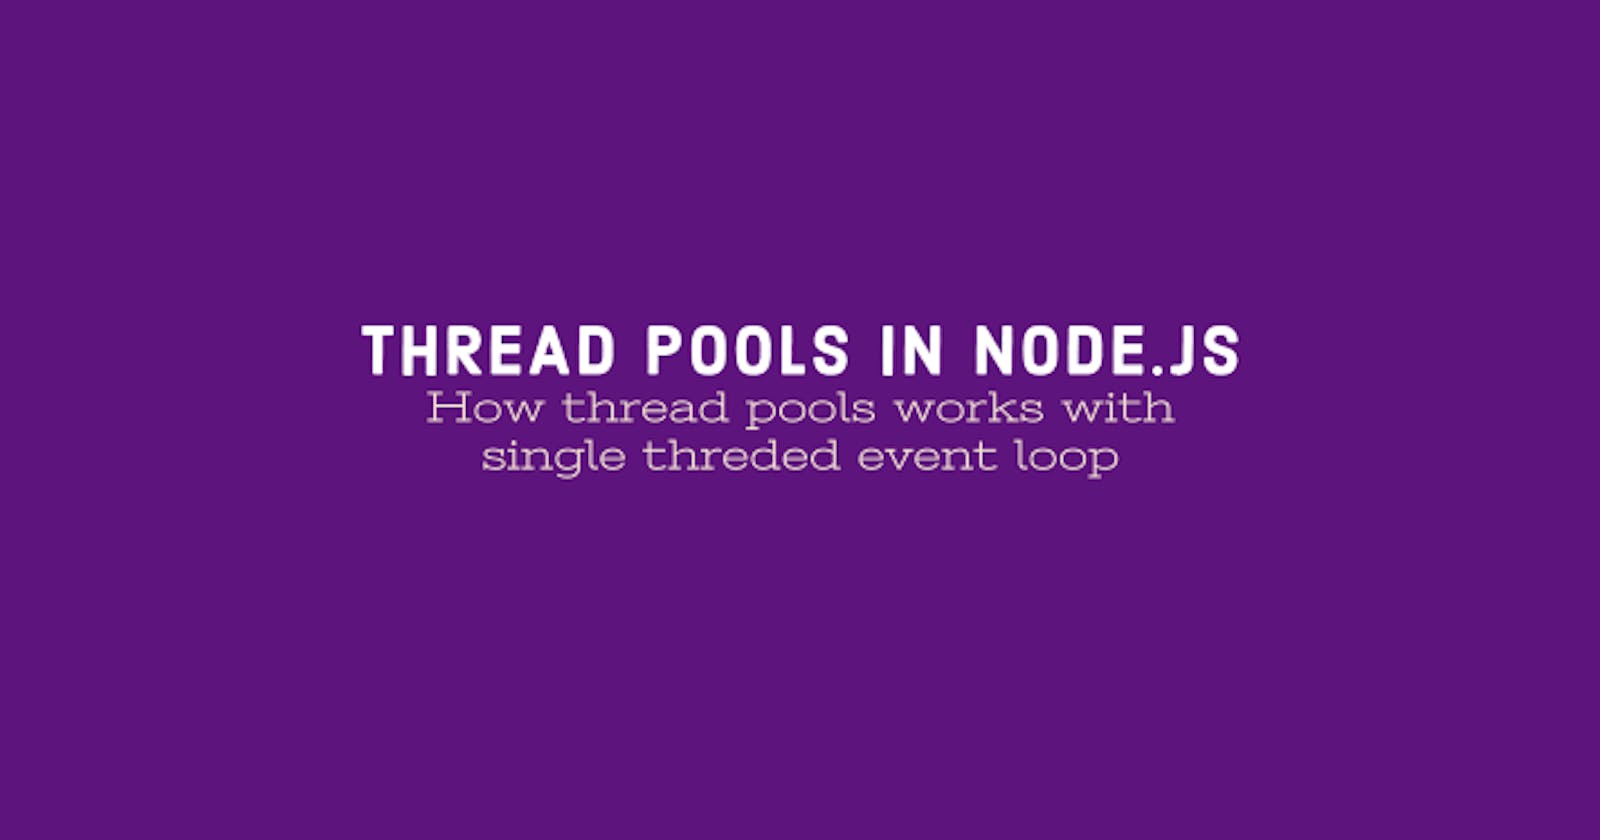 Utilizing Thread pools in Node.js